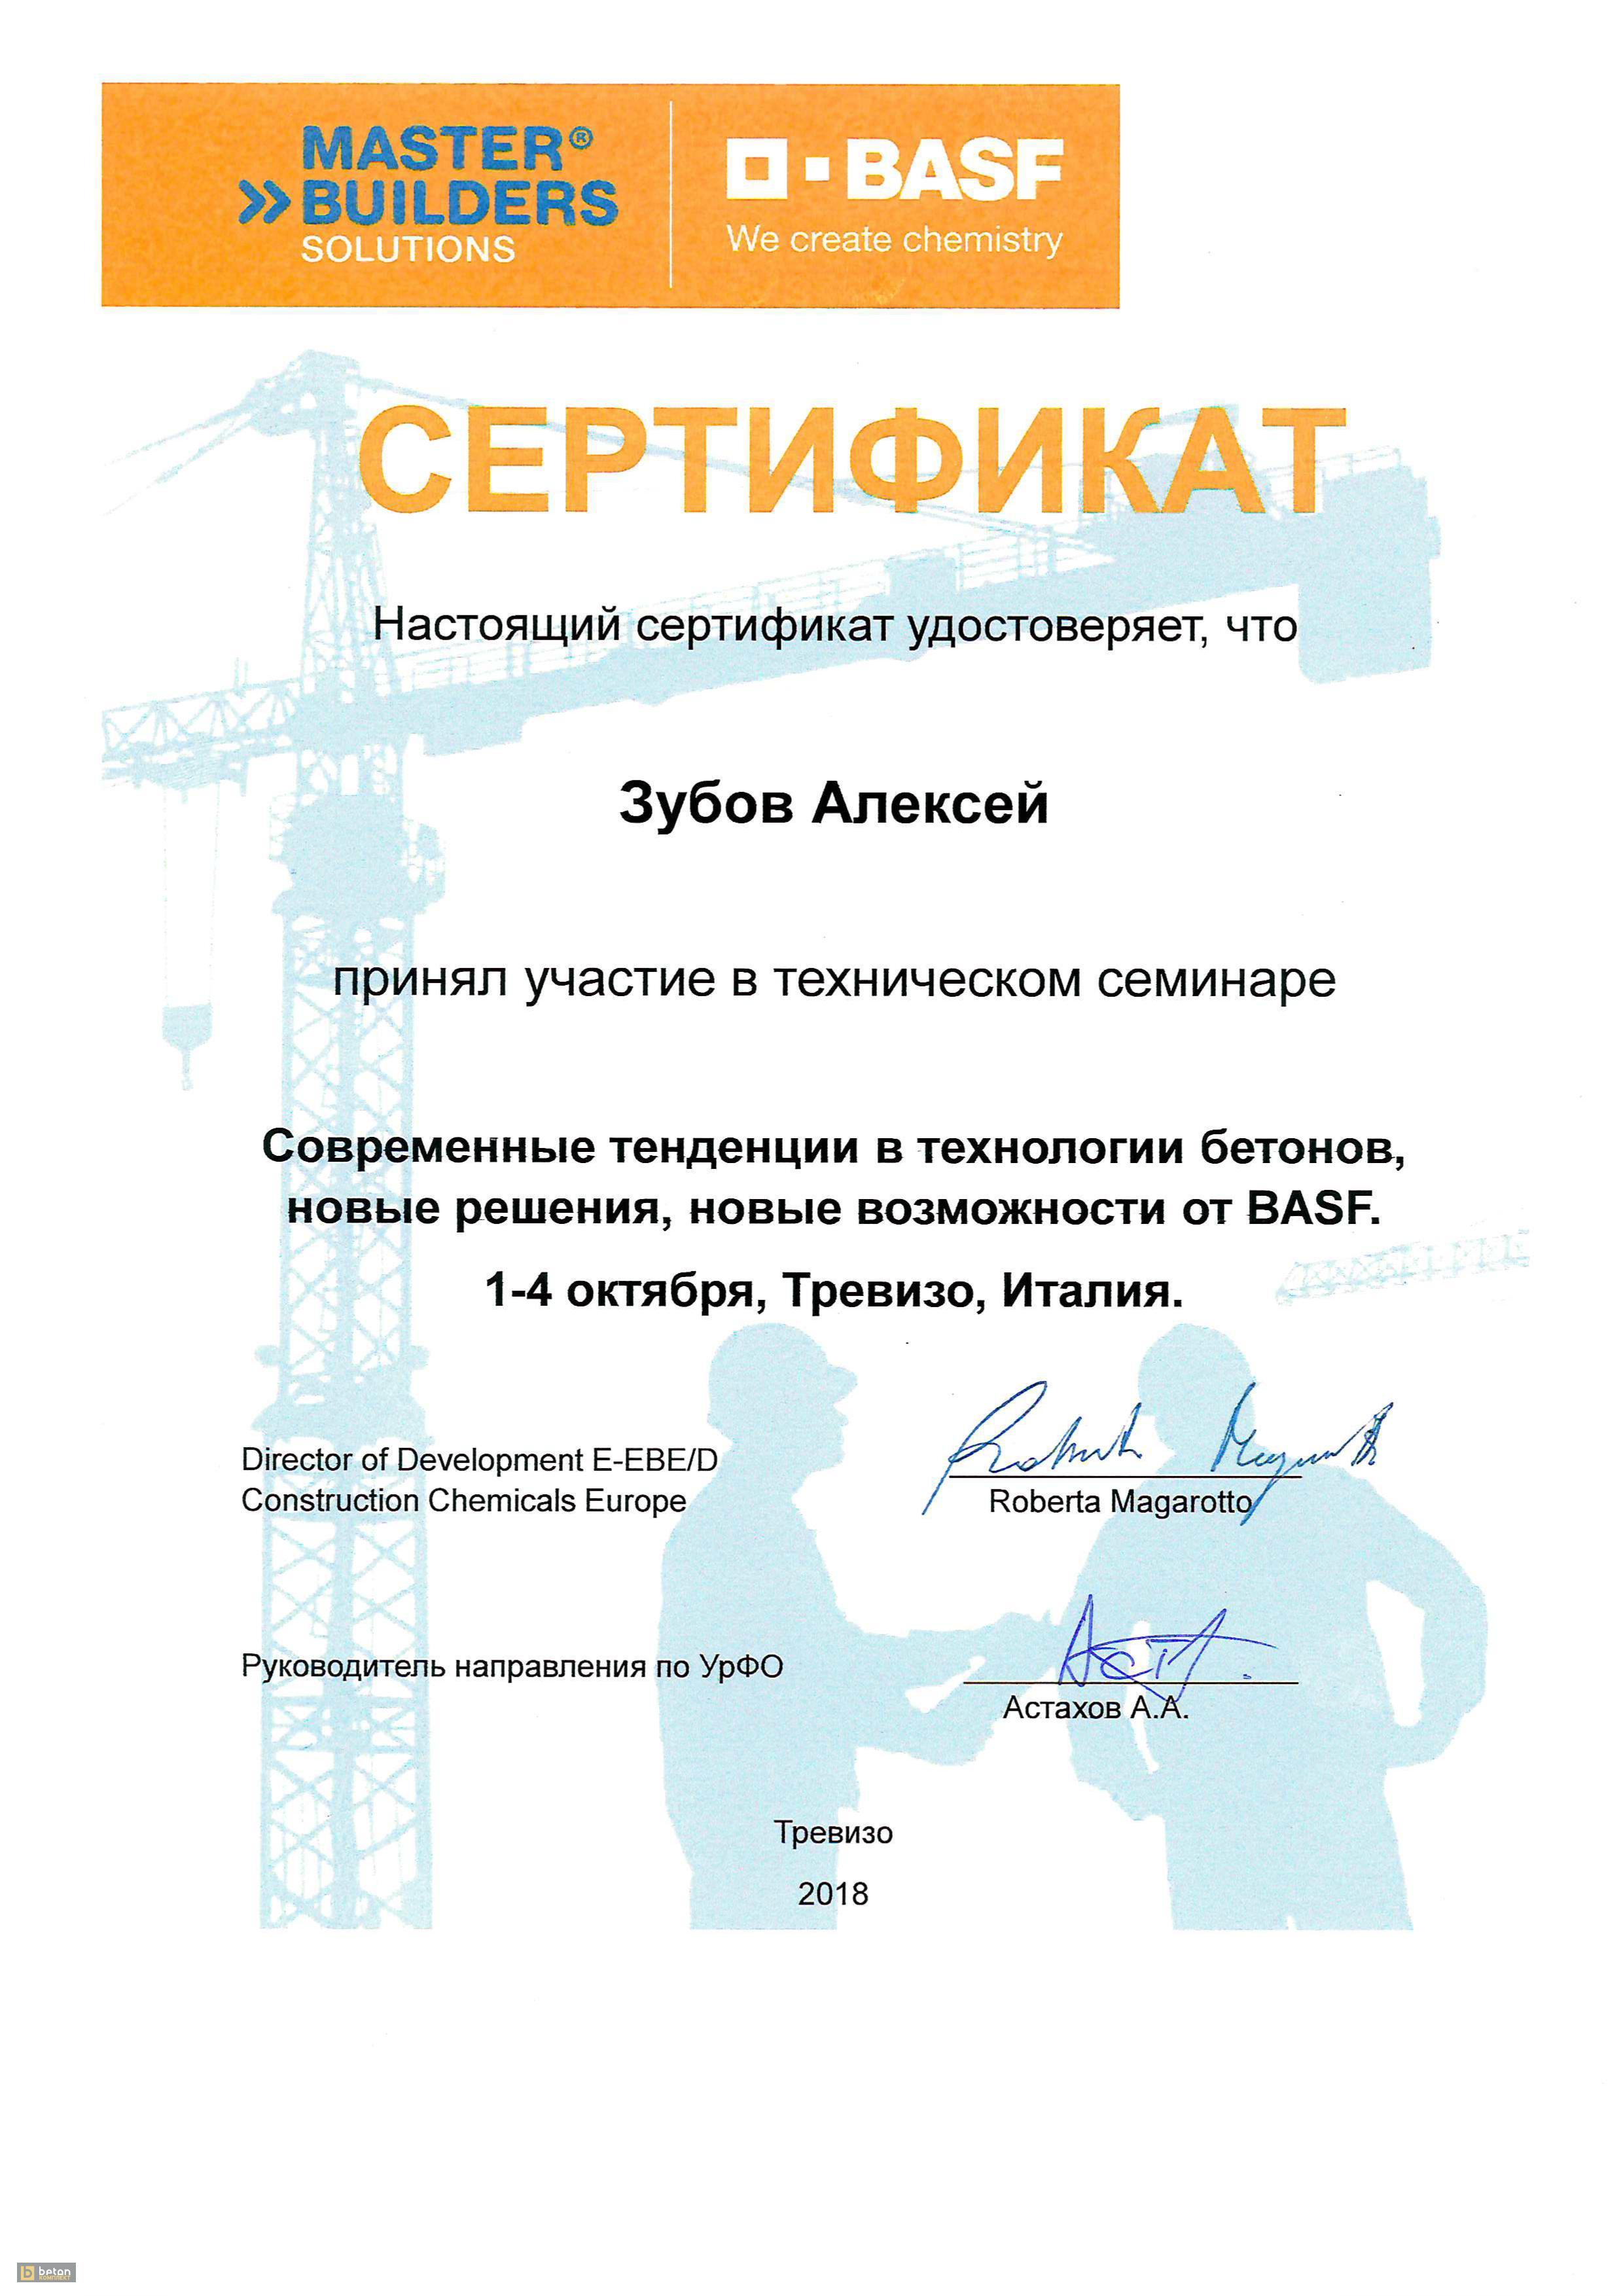 Сертификат об участии в семинаре BASF